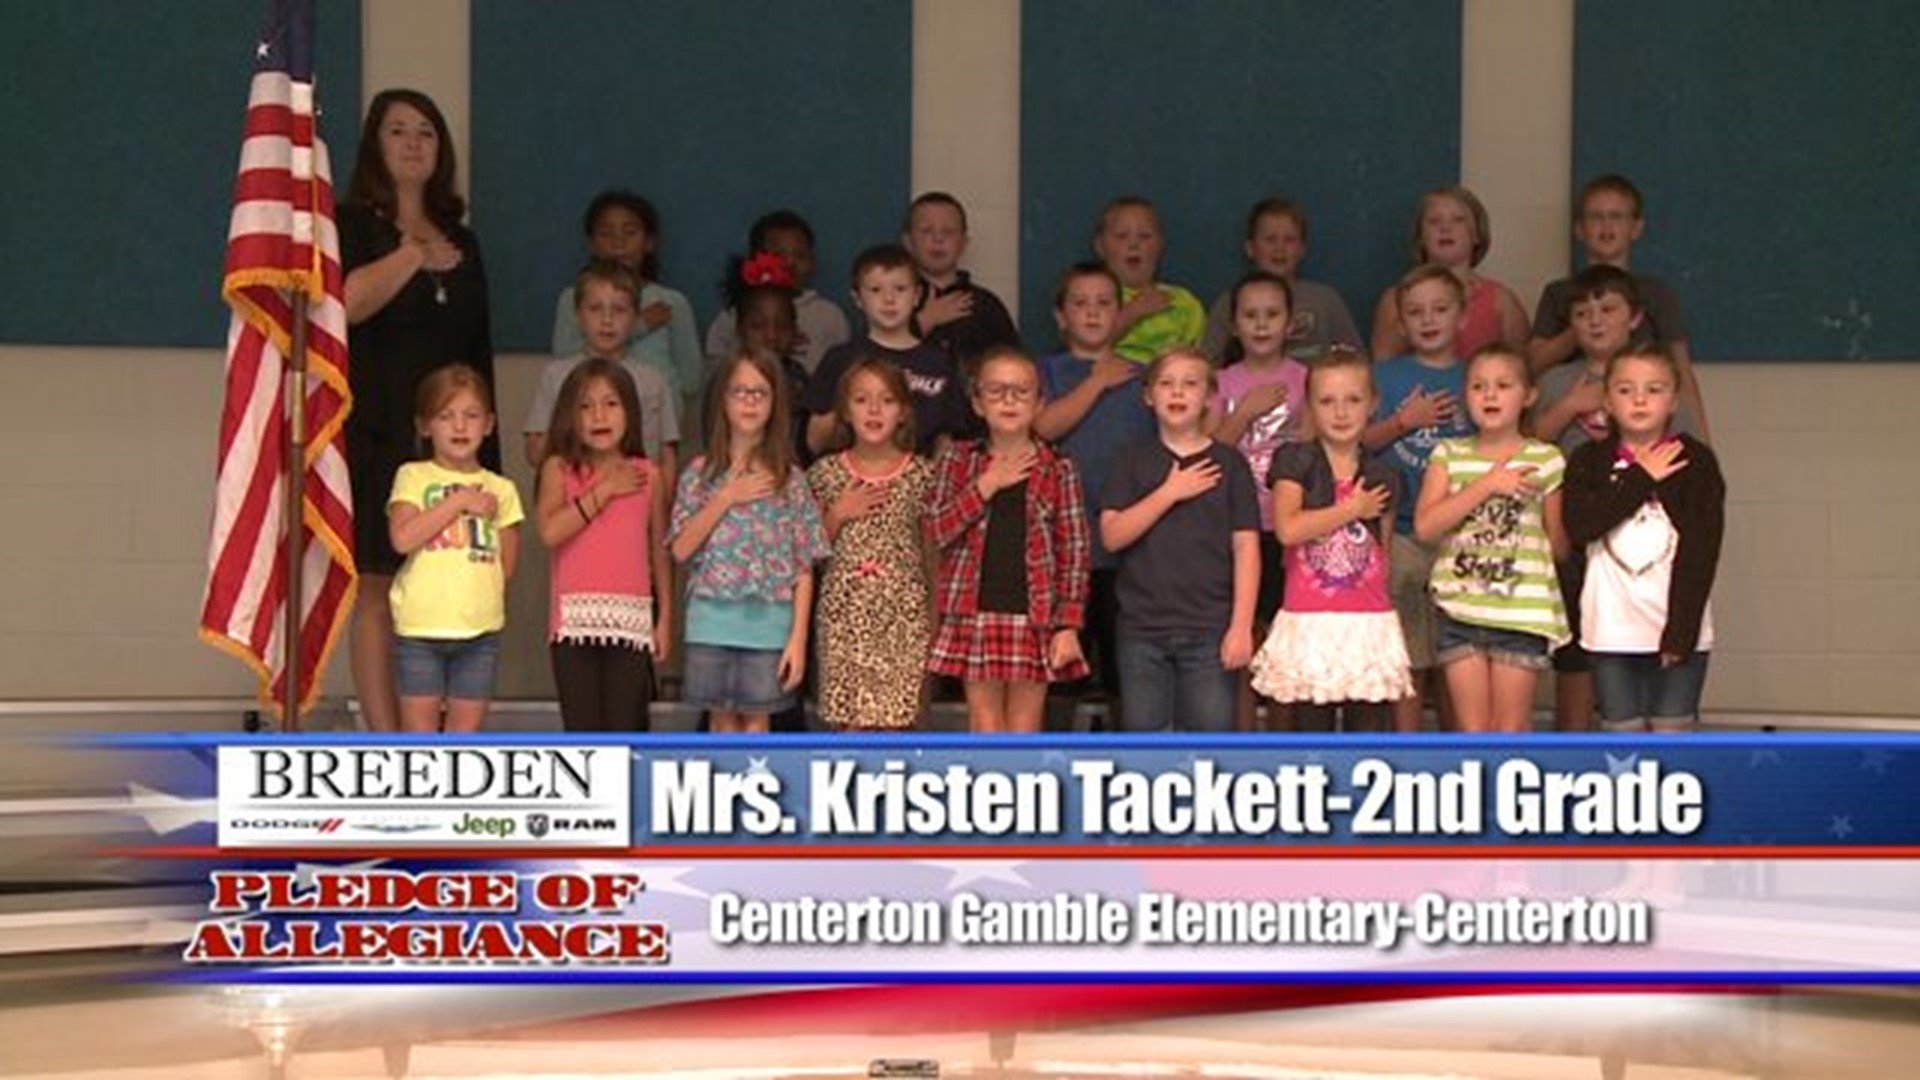 Centerton Gamble Elementary, Centerton - Mrs. Kristen Tackett - 2nd Grade